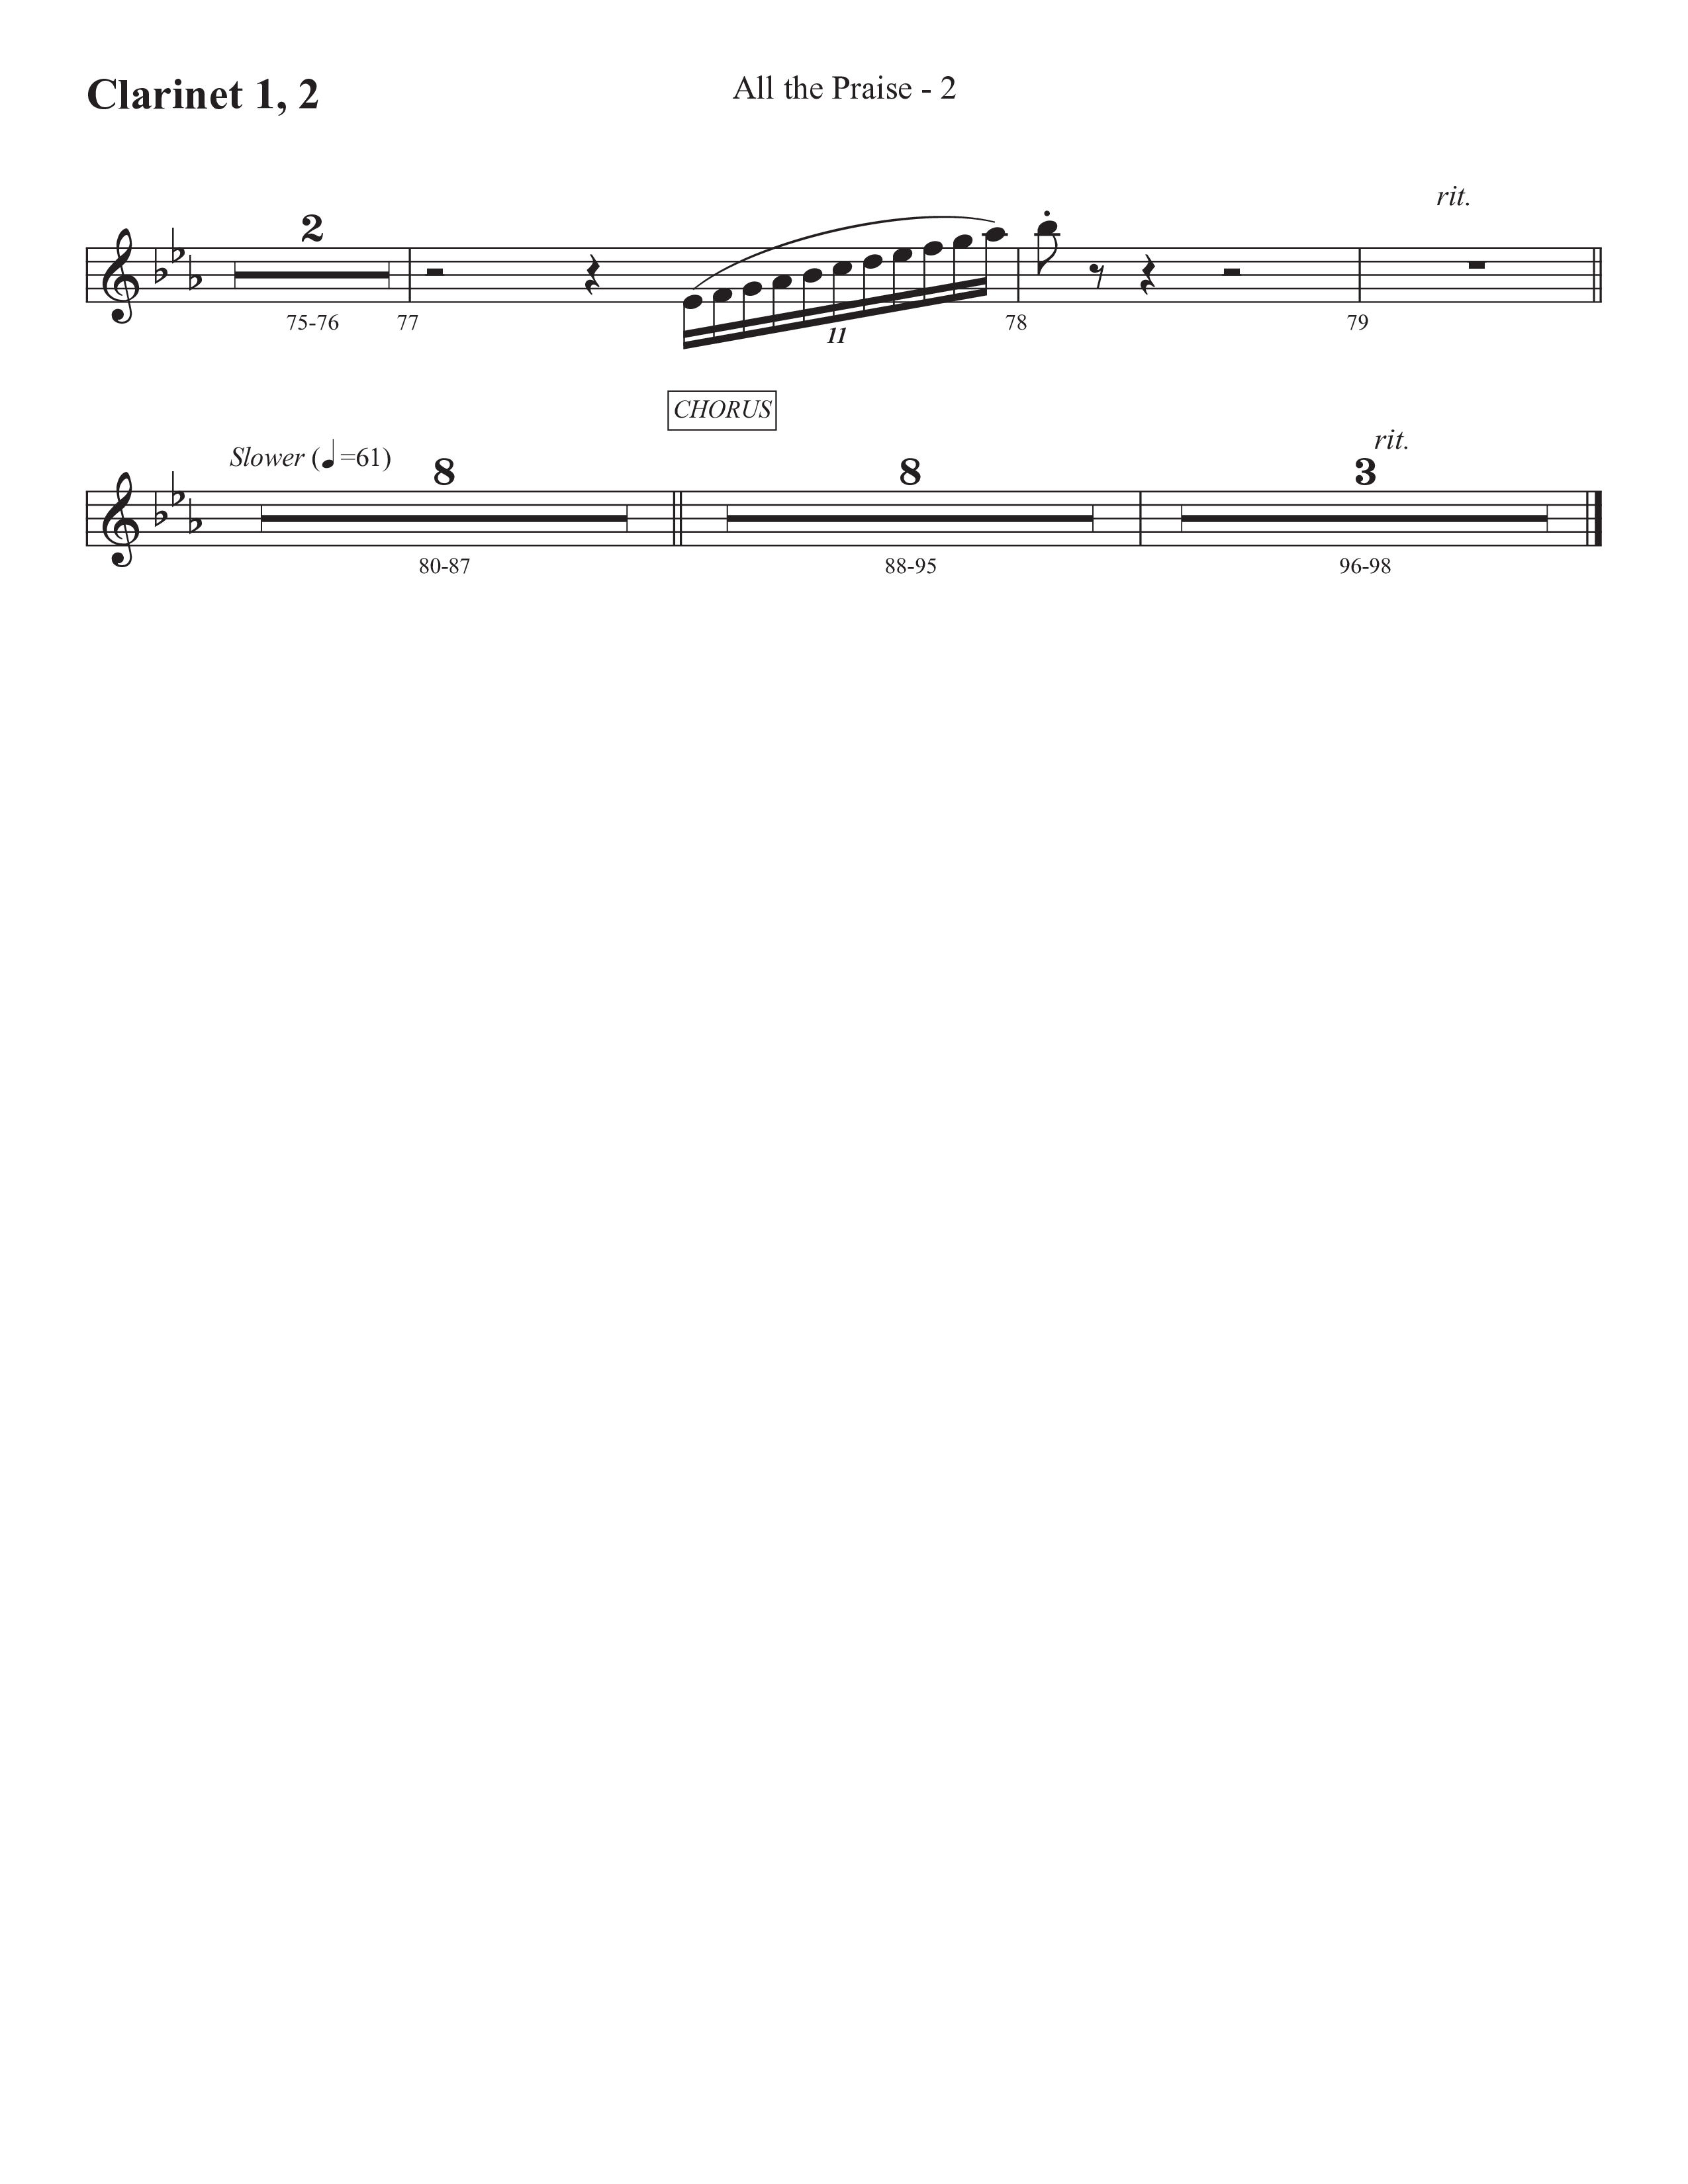 All The Praise (Choral Anthem SATB) Clarinet 1/2 (Prestonwood Worship / Prestonwood Choir / Arr. Michael Neale / Orch. Carson Wagner)